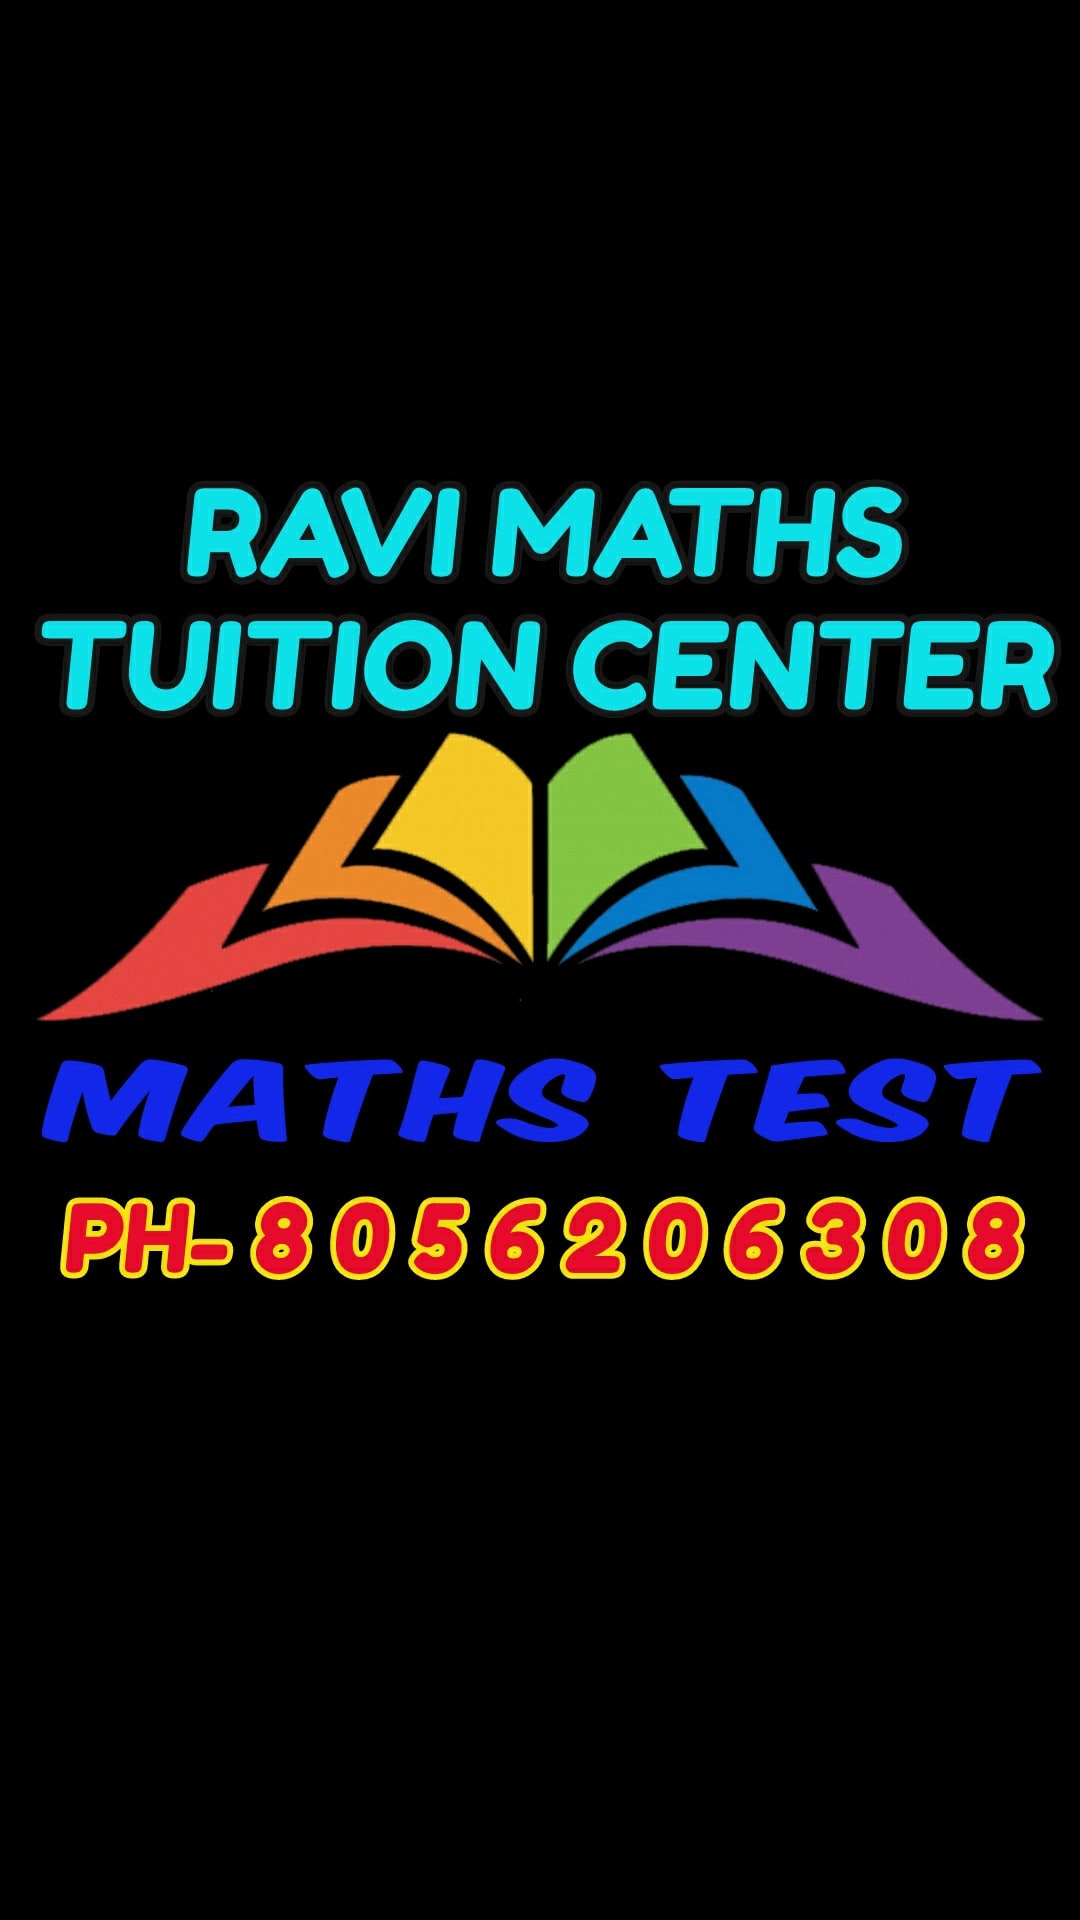 Ravi Maths Tuition Center